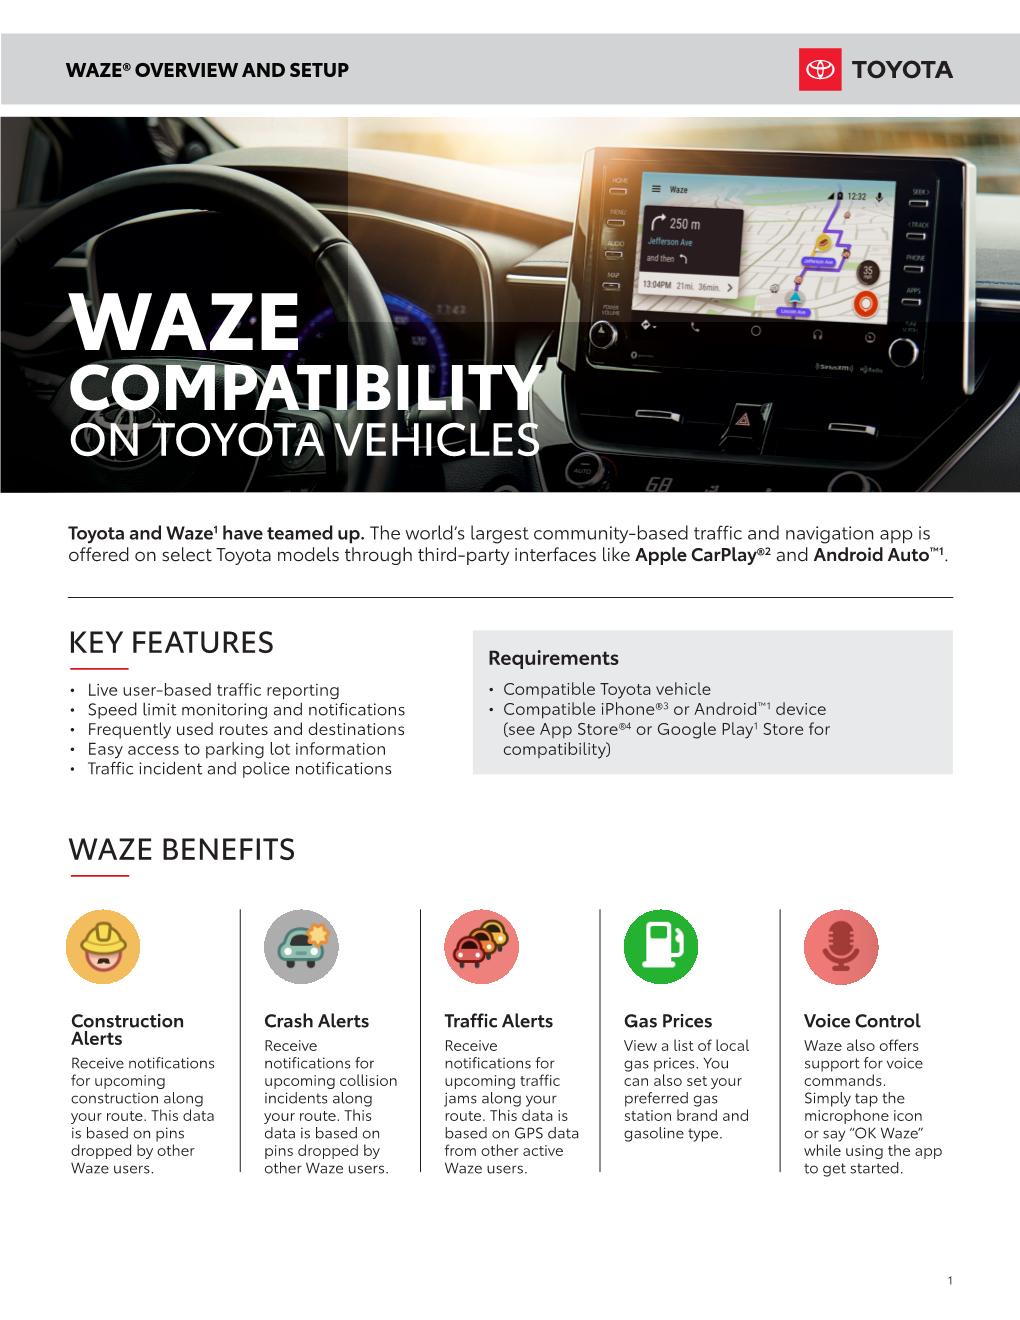 Waze Compatible on Toyota